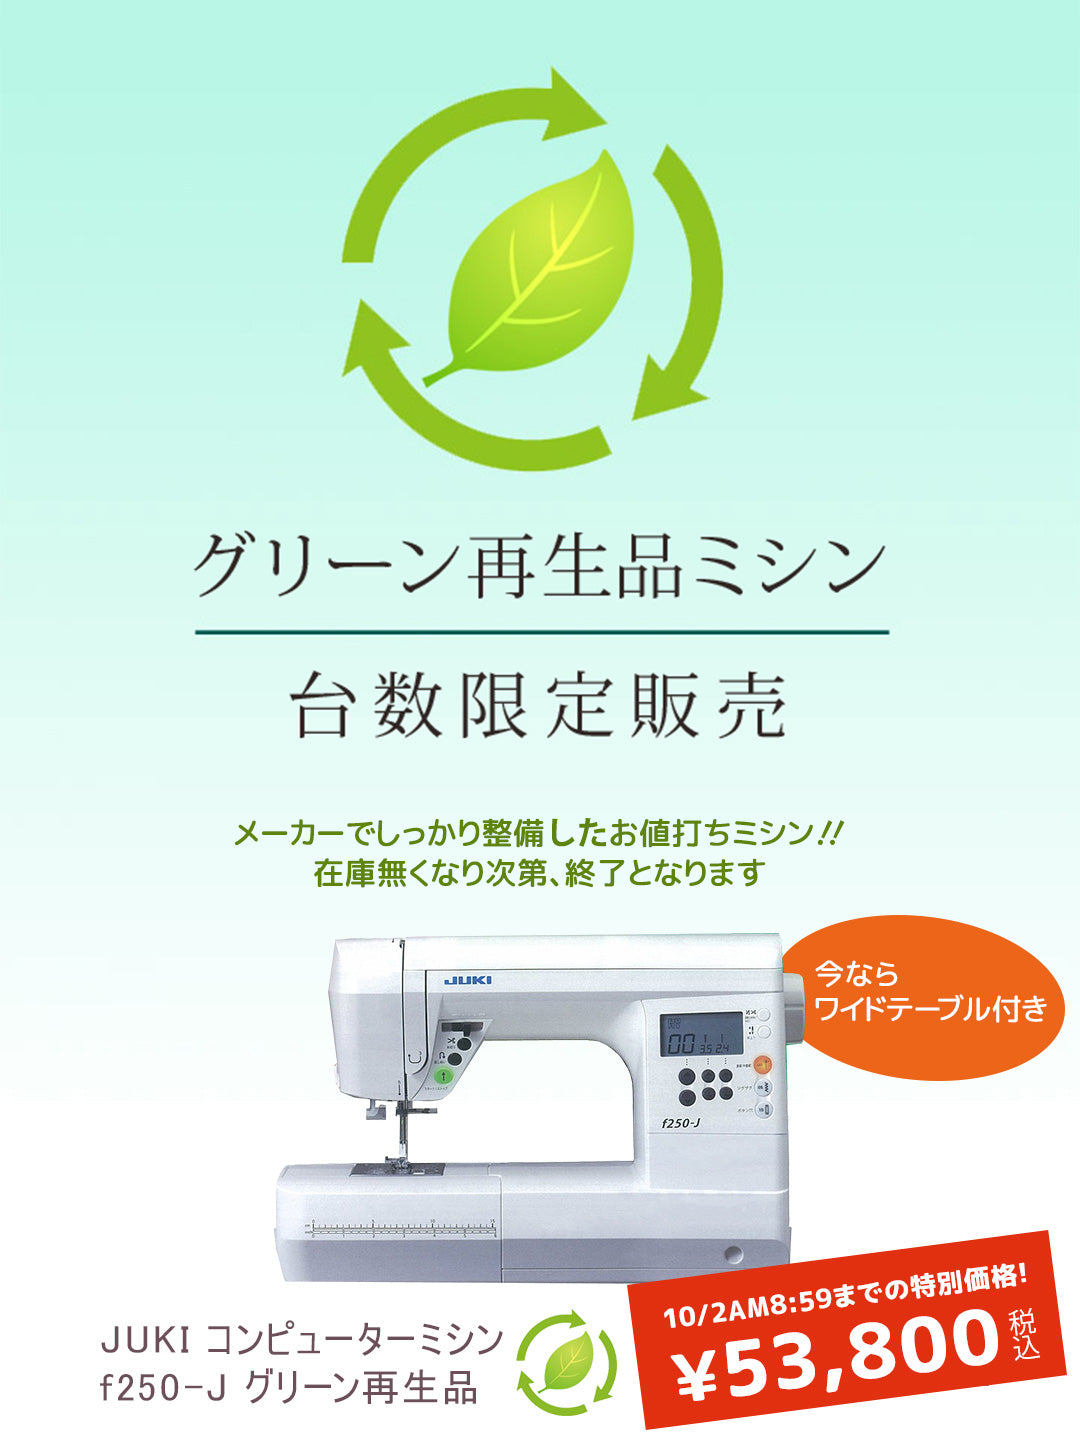 JUKI コンピューターミシン f250-J グリーン再生品 – クラフトハート